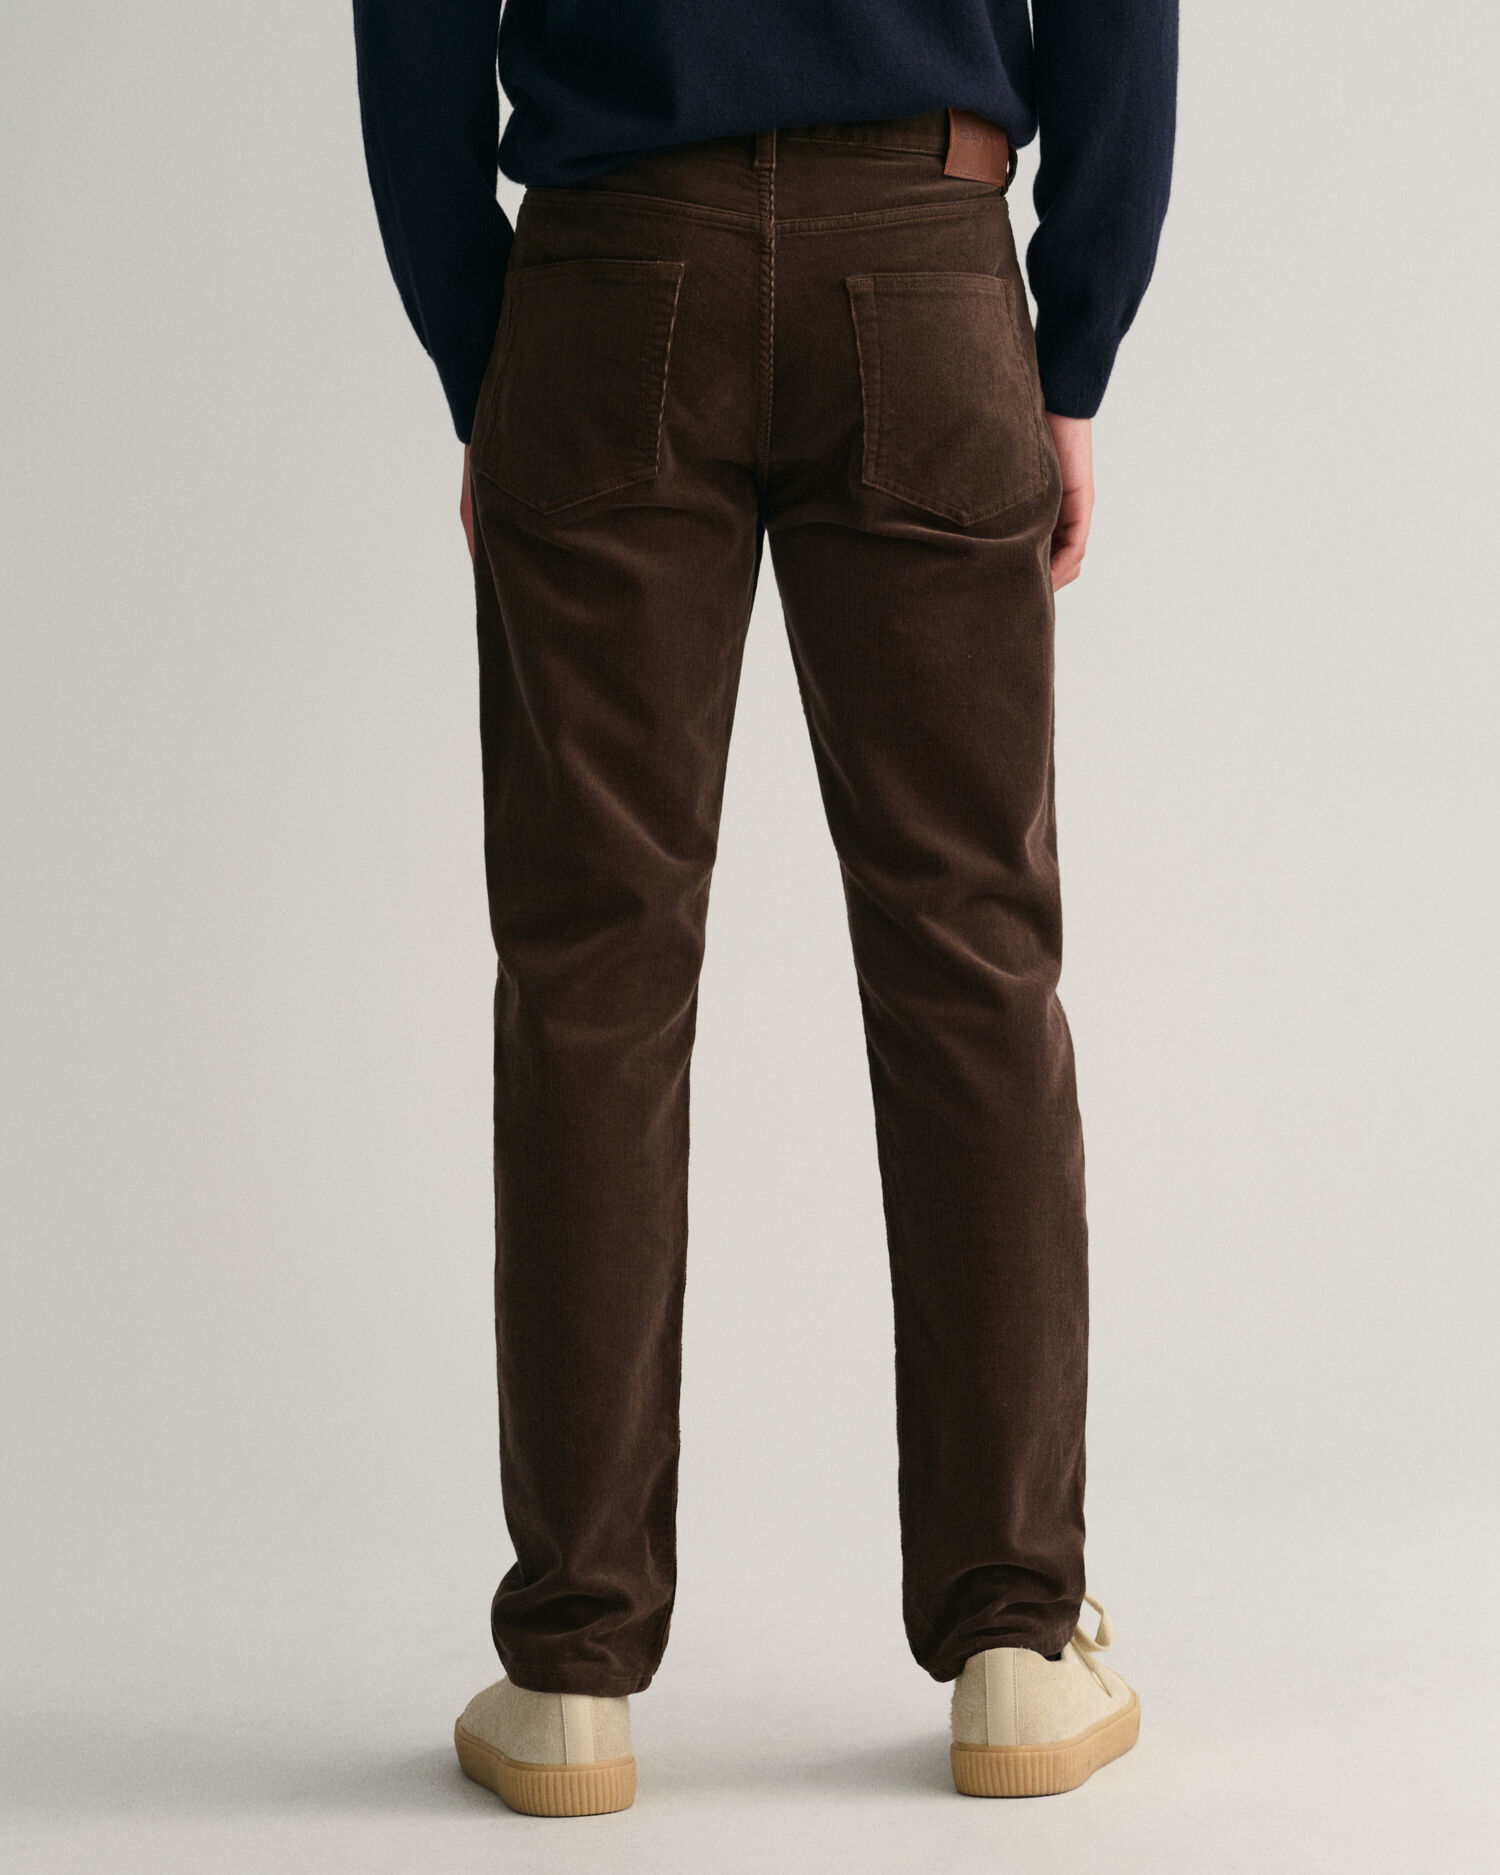 Buy Mens's Vintage Beige Corduroy Pant Online | SNITCH